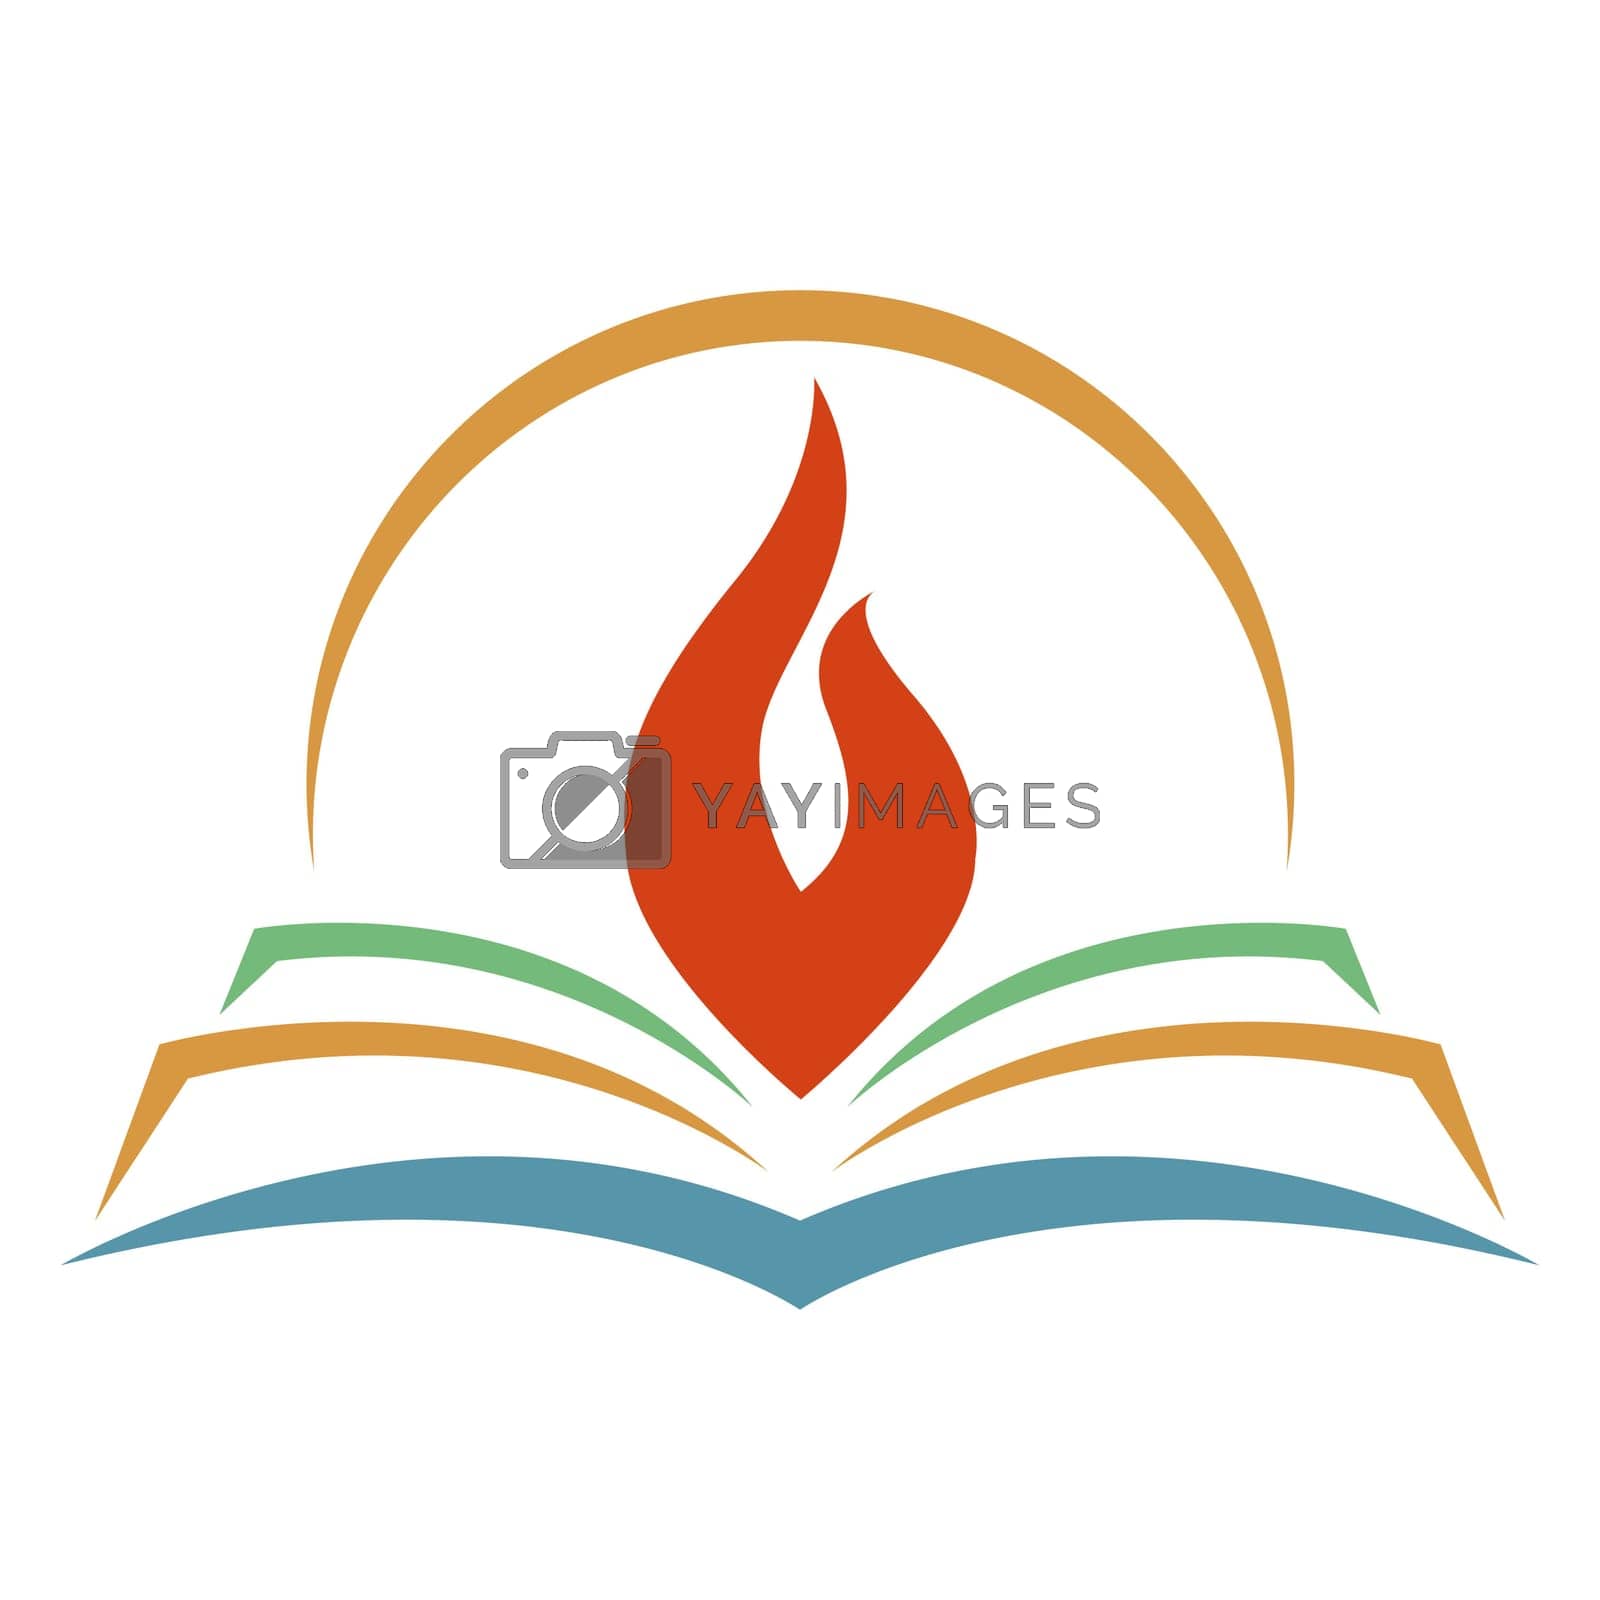 Royalty free image of Education school logo design by bellaxbudhong3